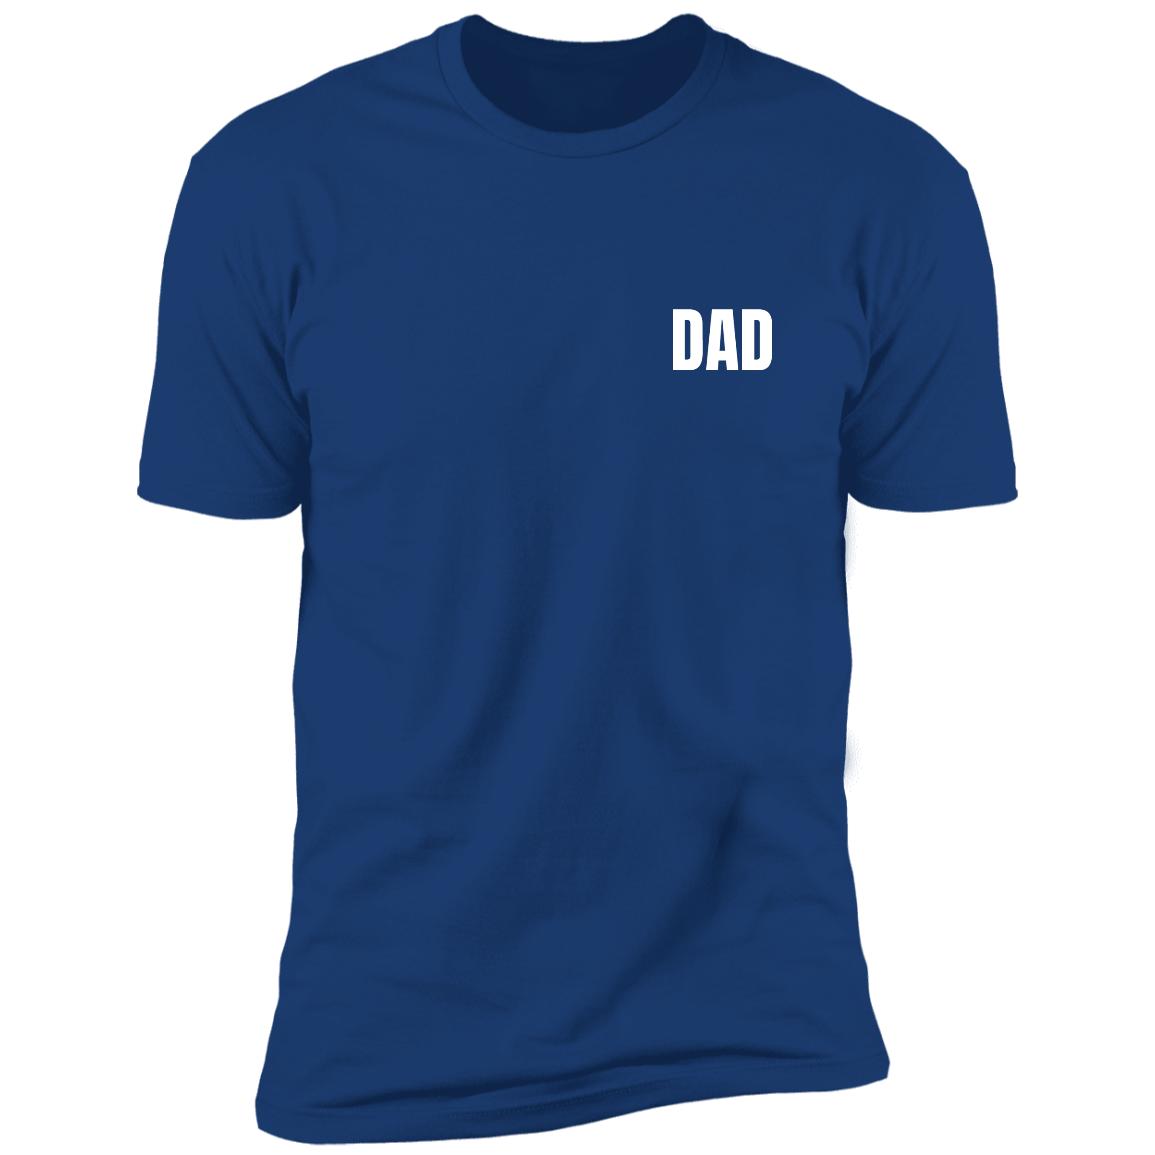 Men's T-Shirt For Dad In Royal Color